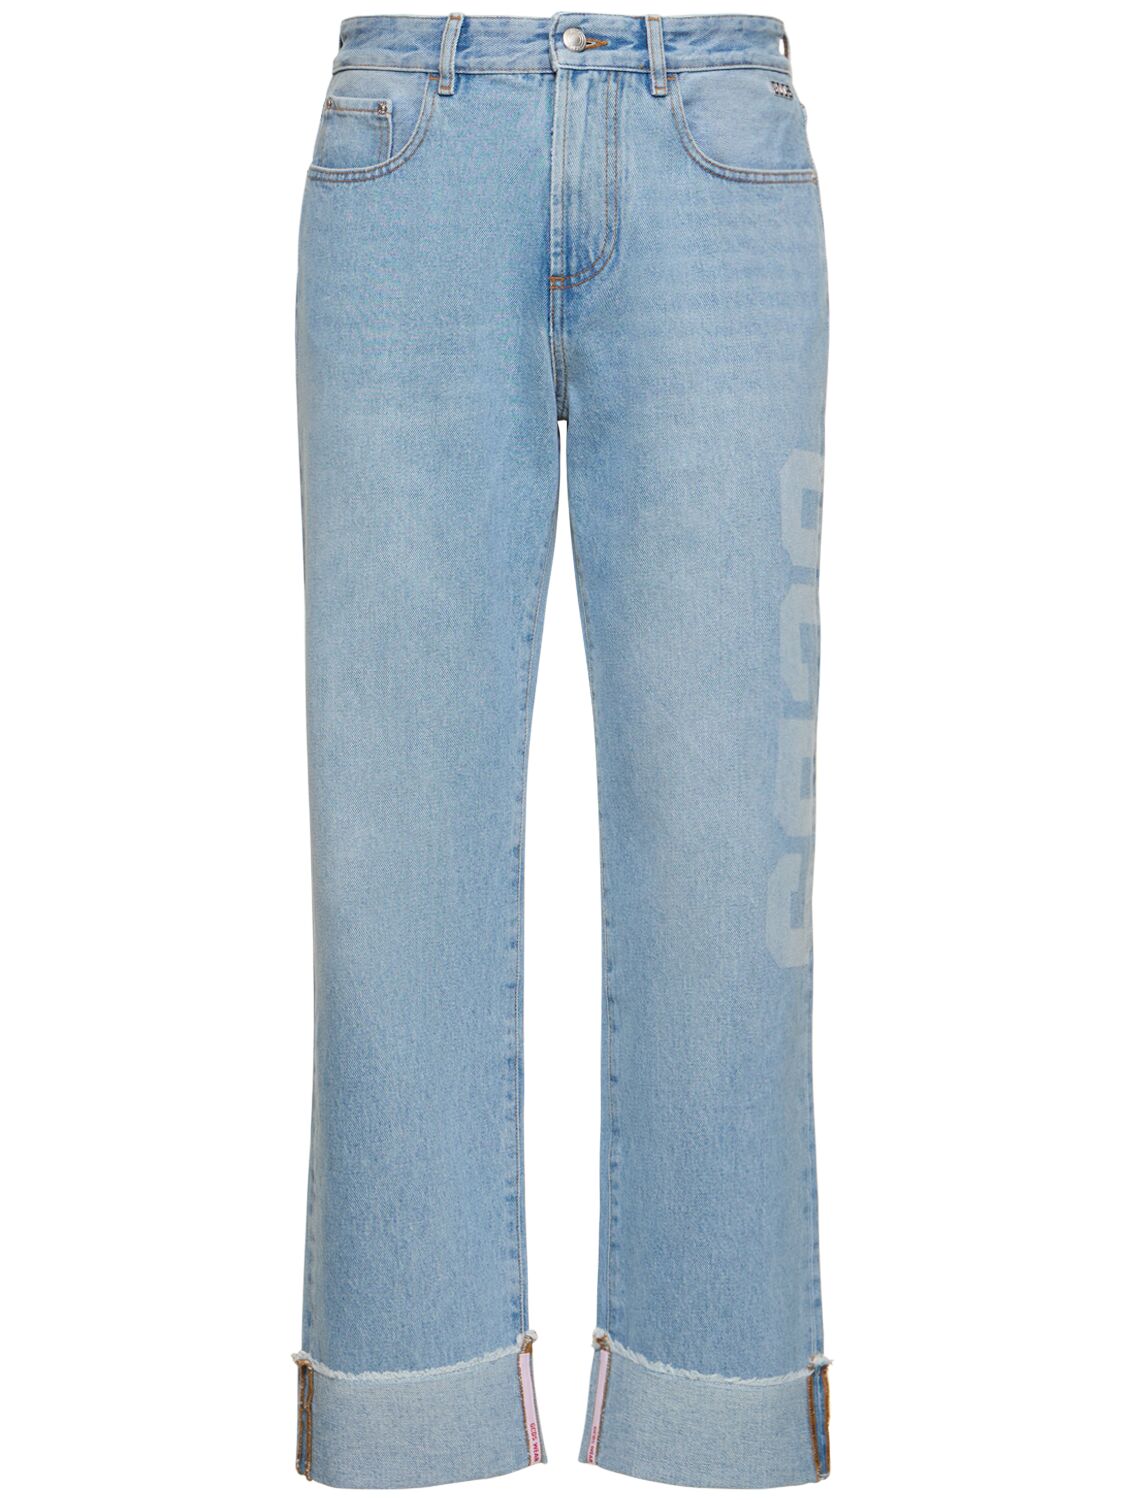 Shop Gcds 23cm Laser Logo Denim Straight Jeans In Light Blue